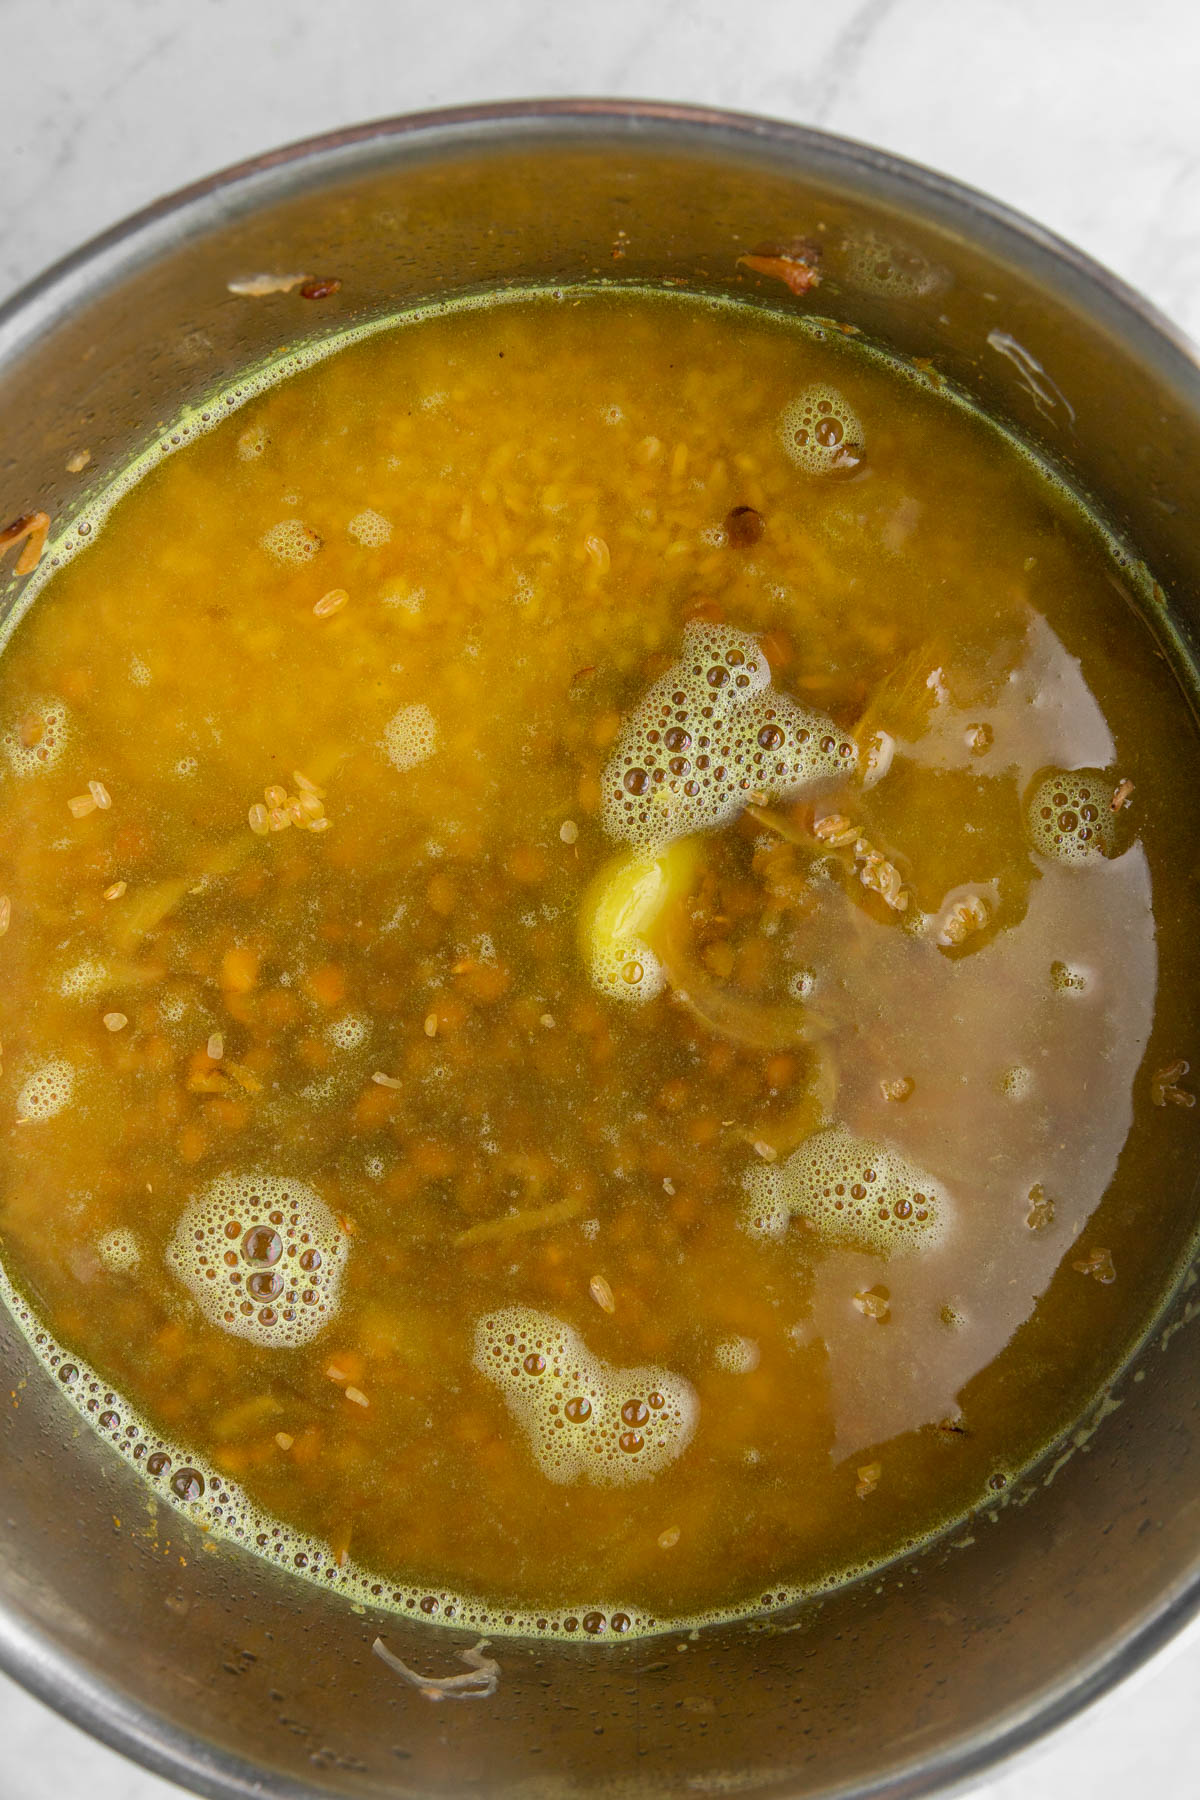 Lentils and bulgur in saucepan with water.